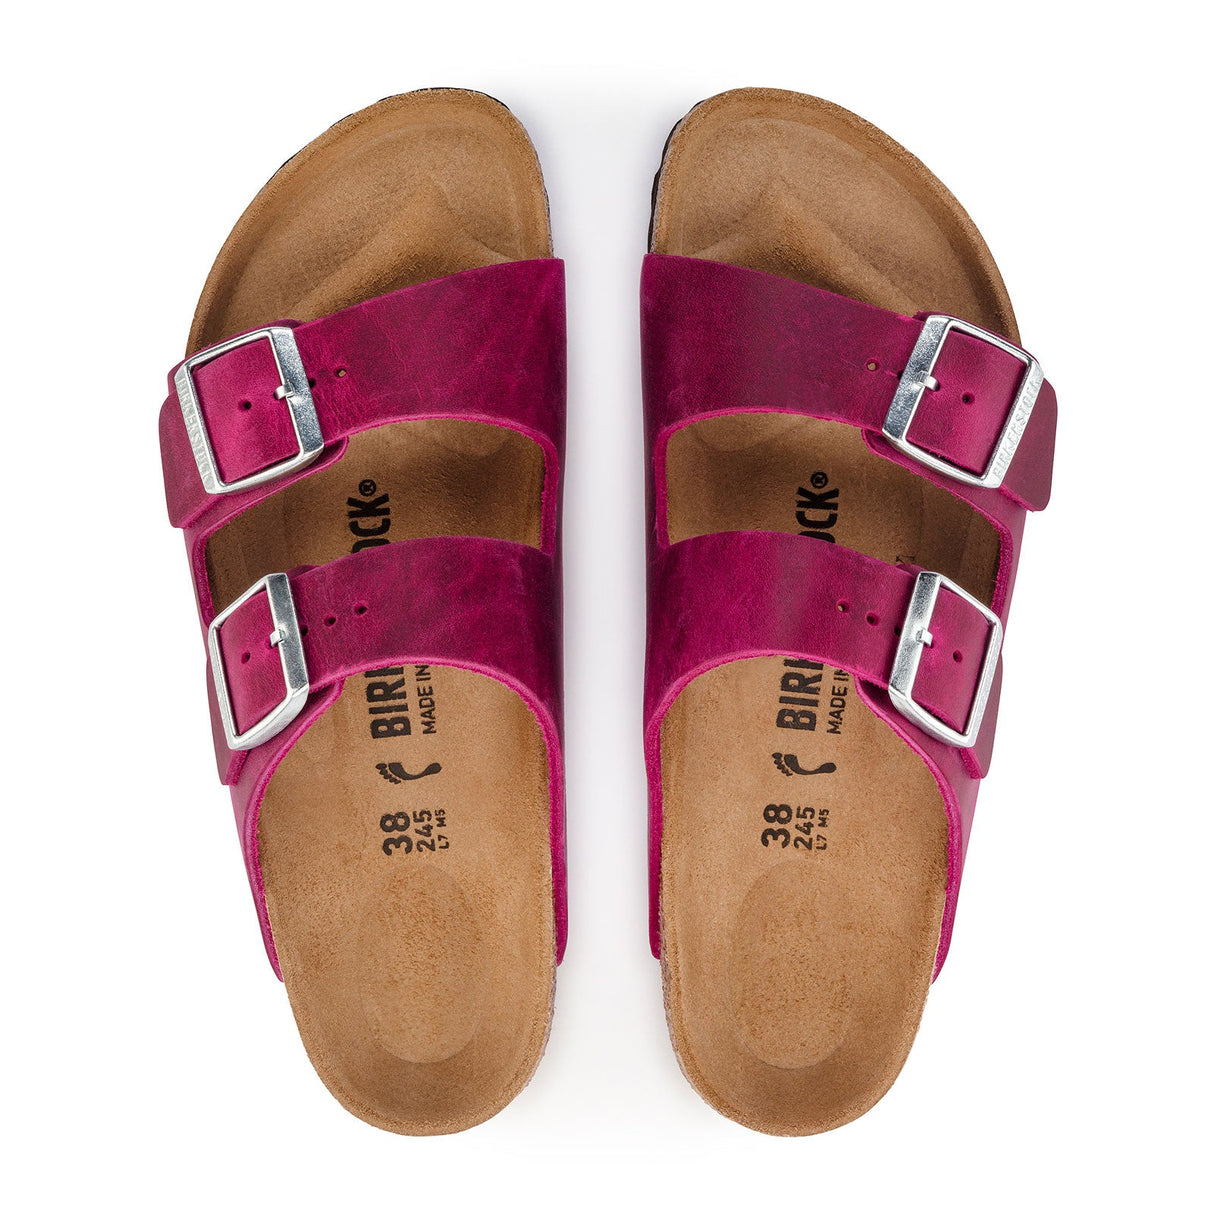 Birkenstock Arizona Narrow Slide Sandal (Women) - Festival Fuchsia Oiled Leather Sandals - Slide - The Heel Shoe Fitters